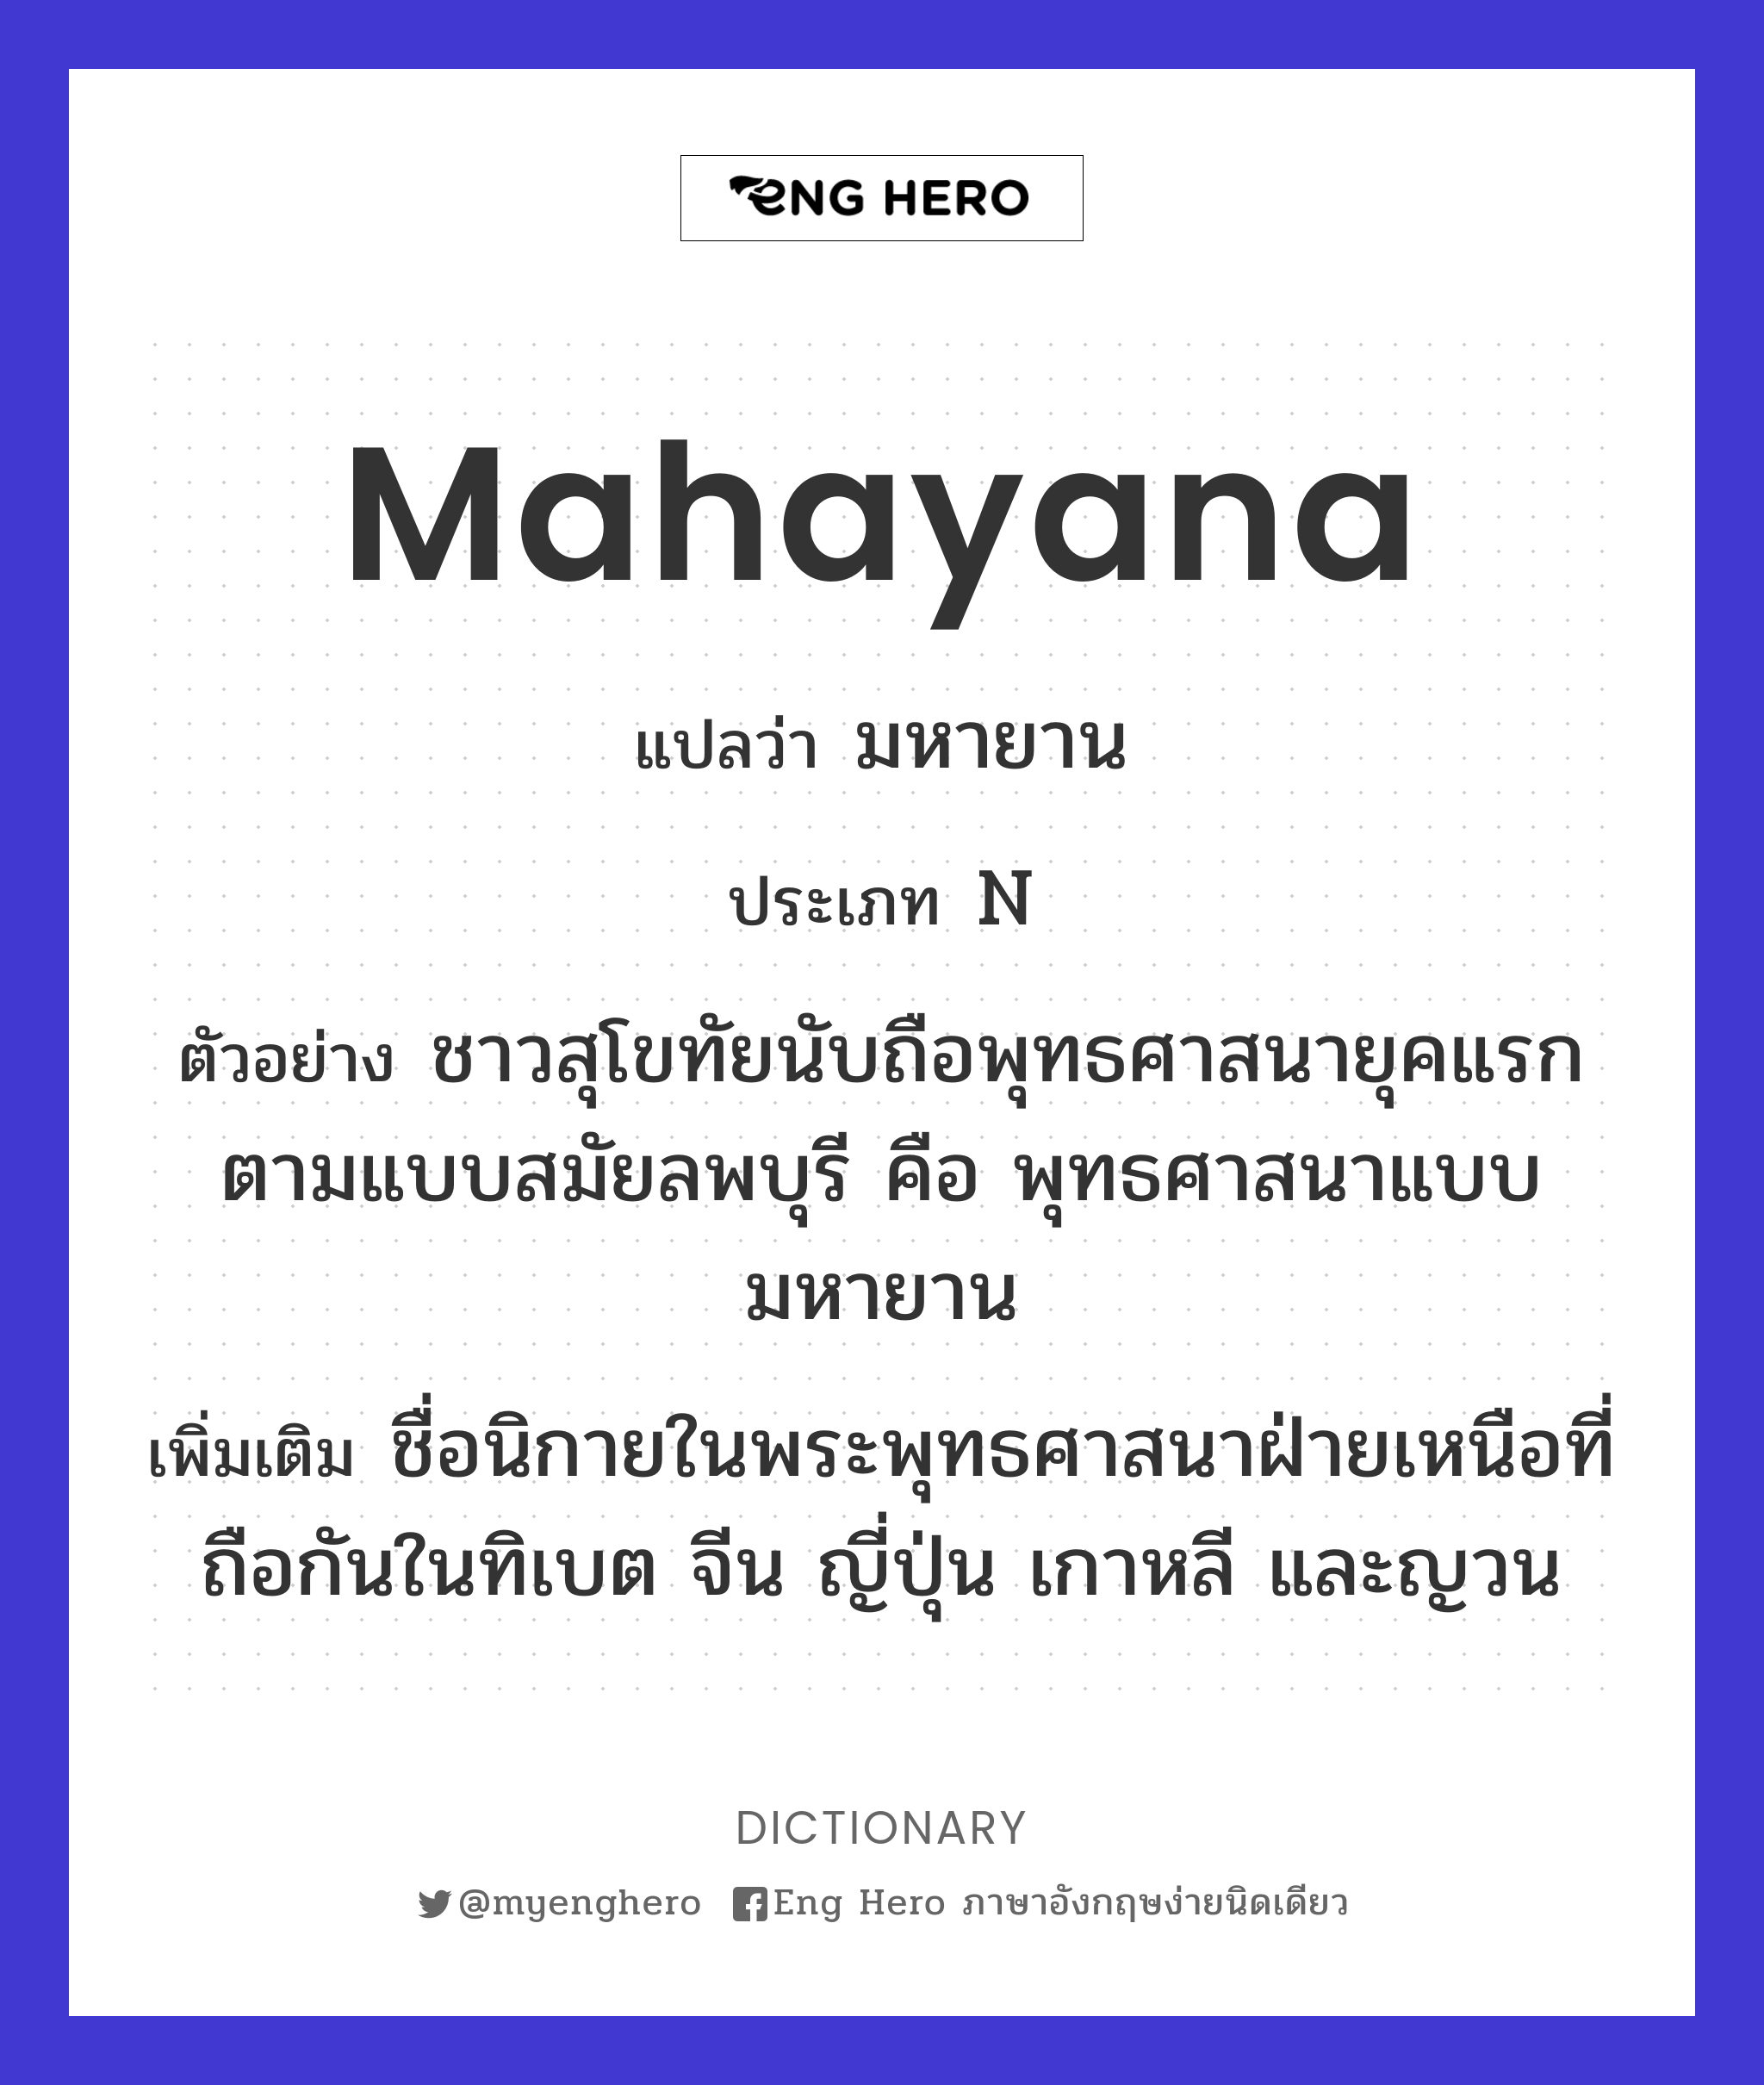 Mahayana